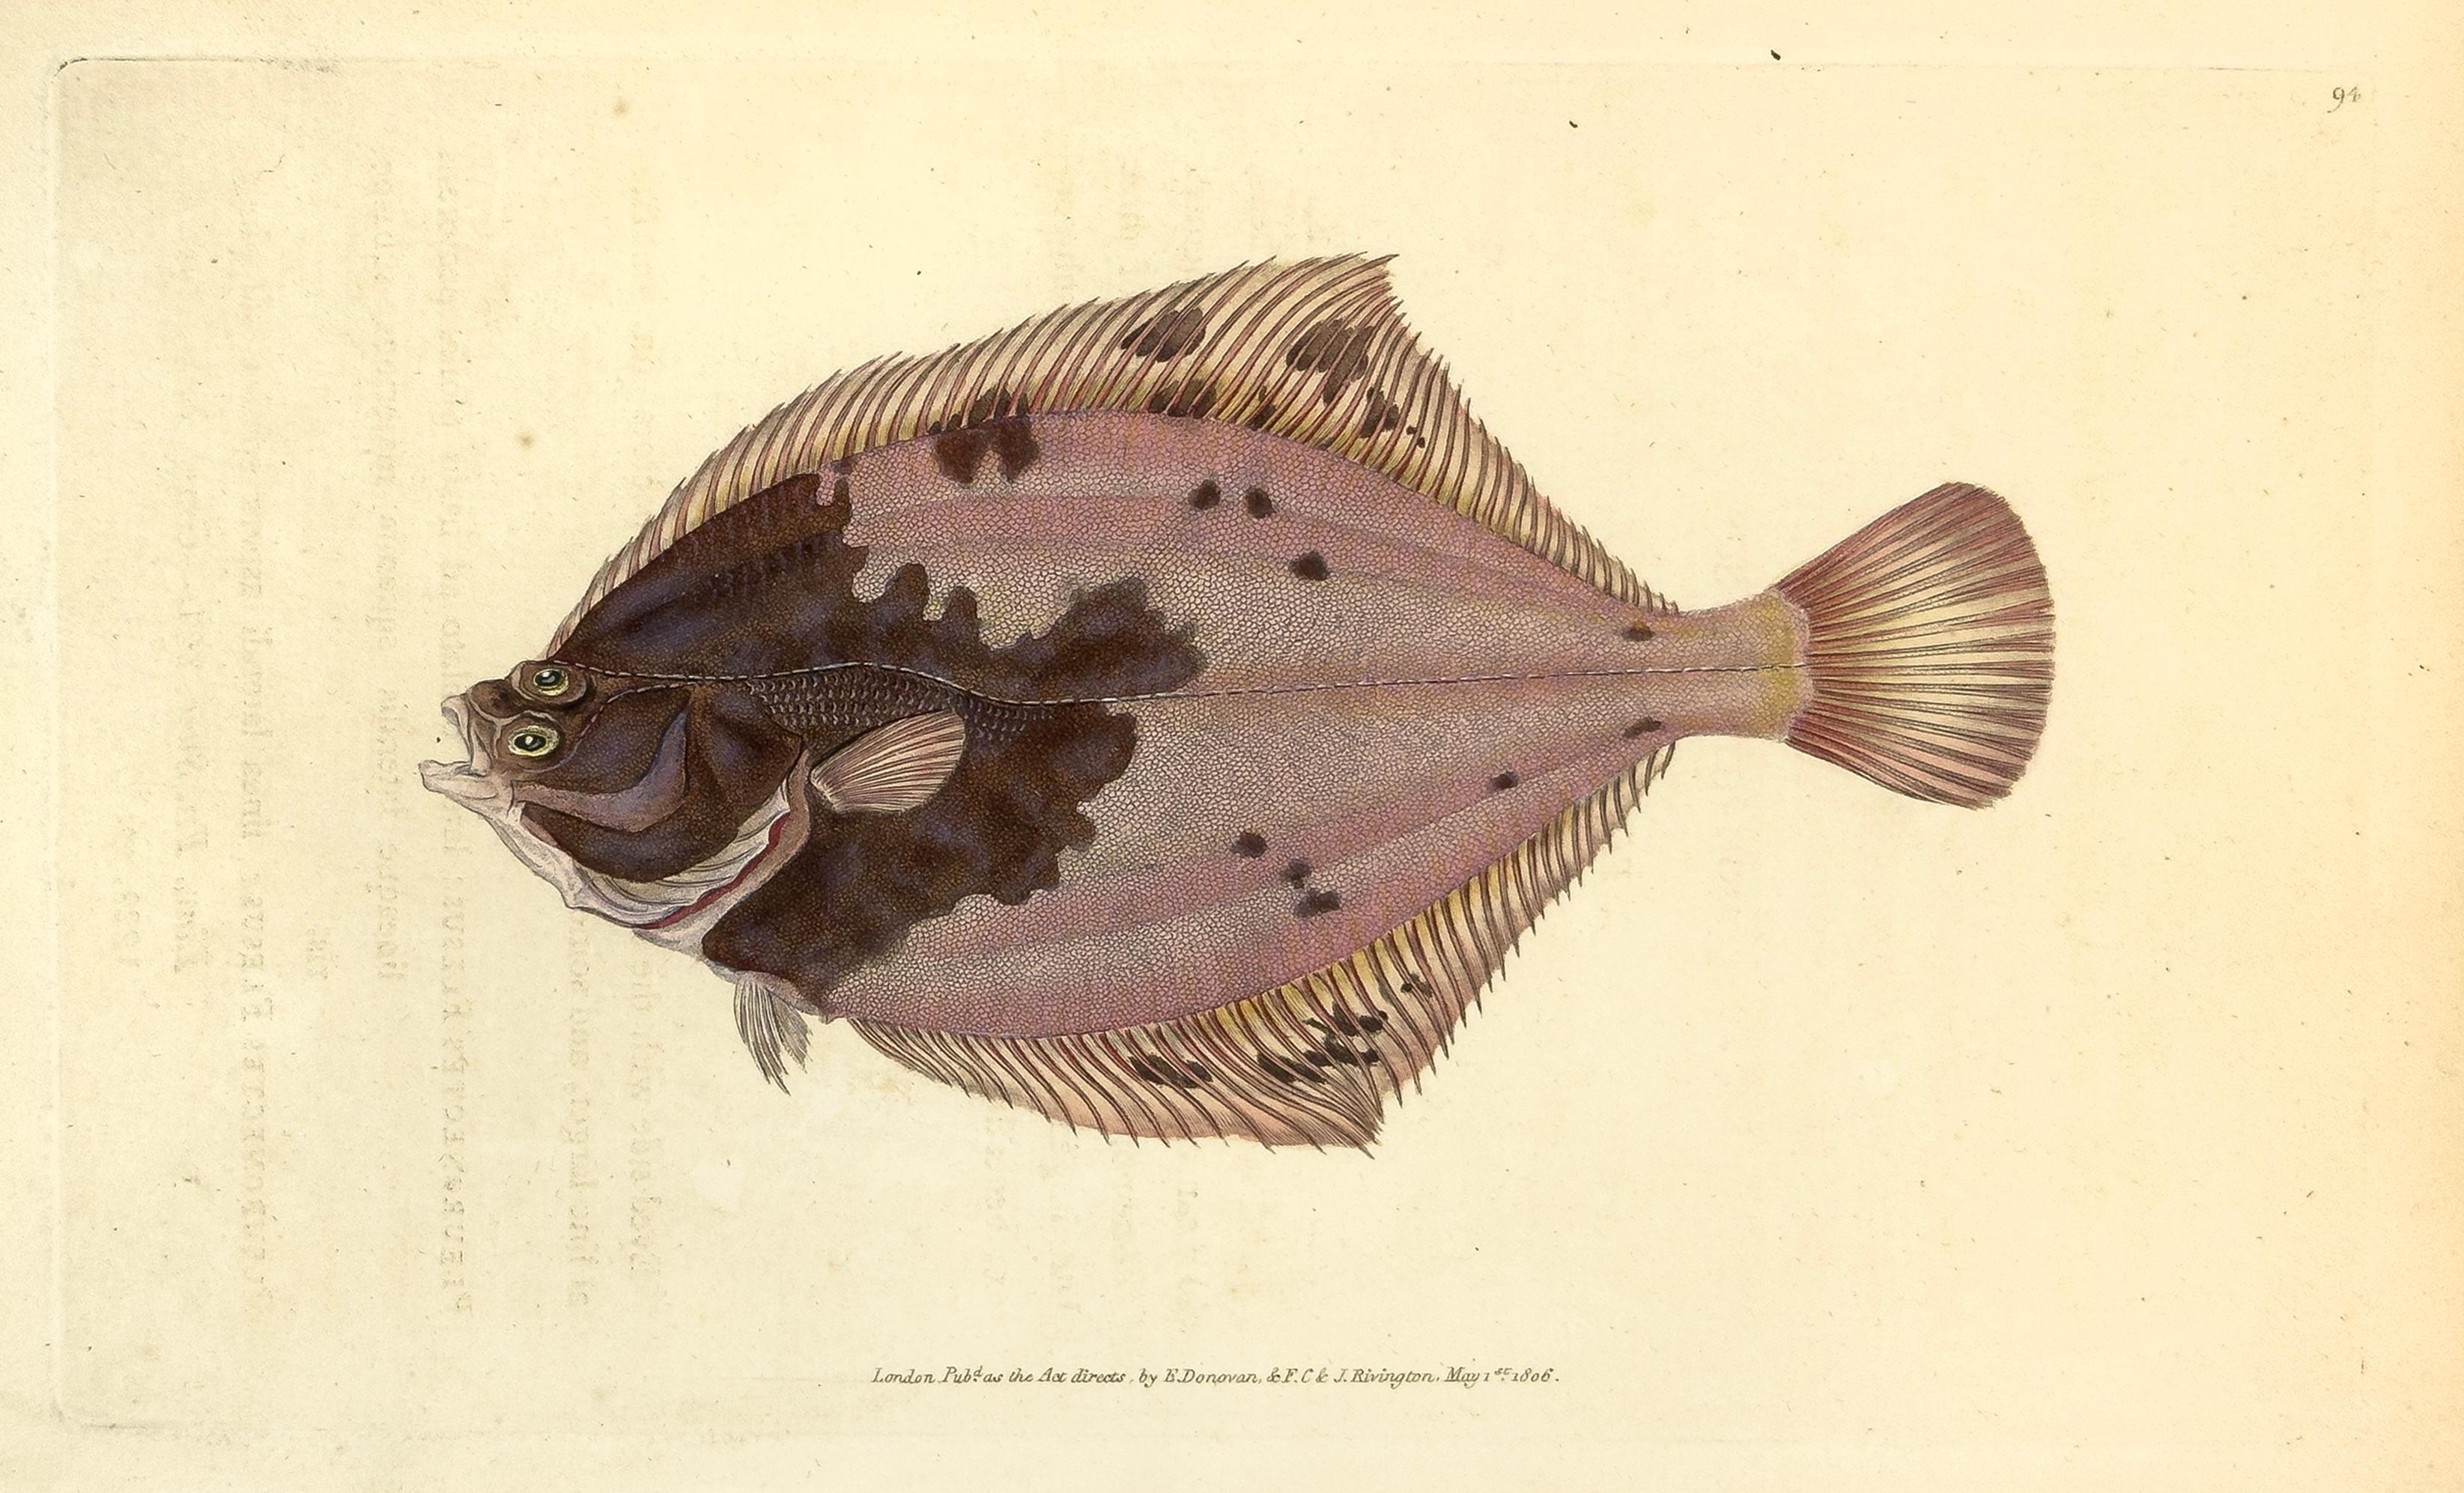 Edward Donovan Animal Print - 94: Pleuronectes flesus, Flounder